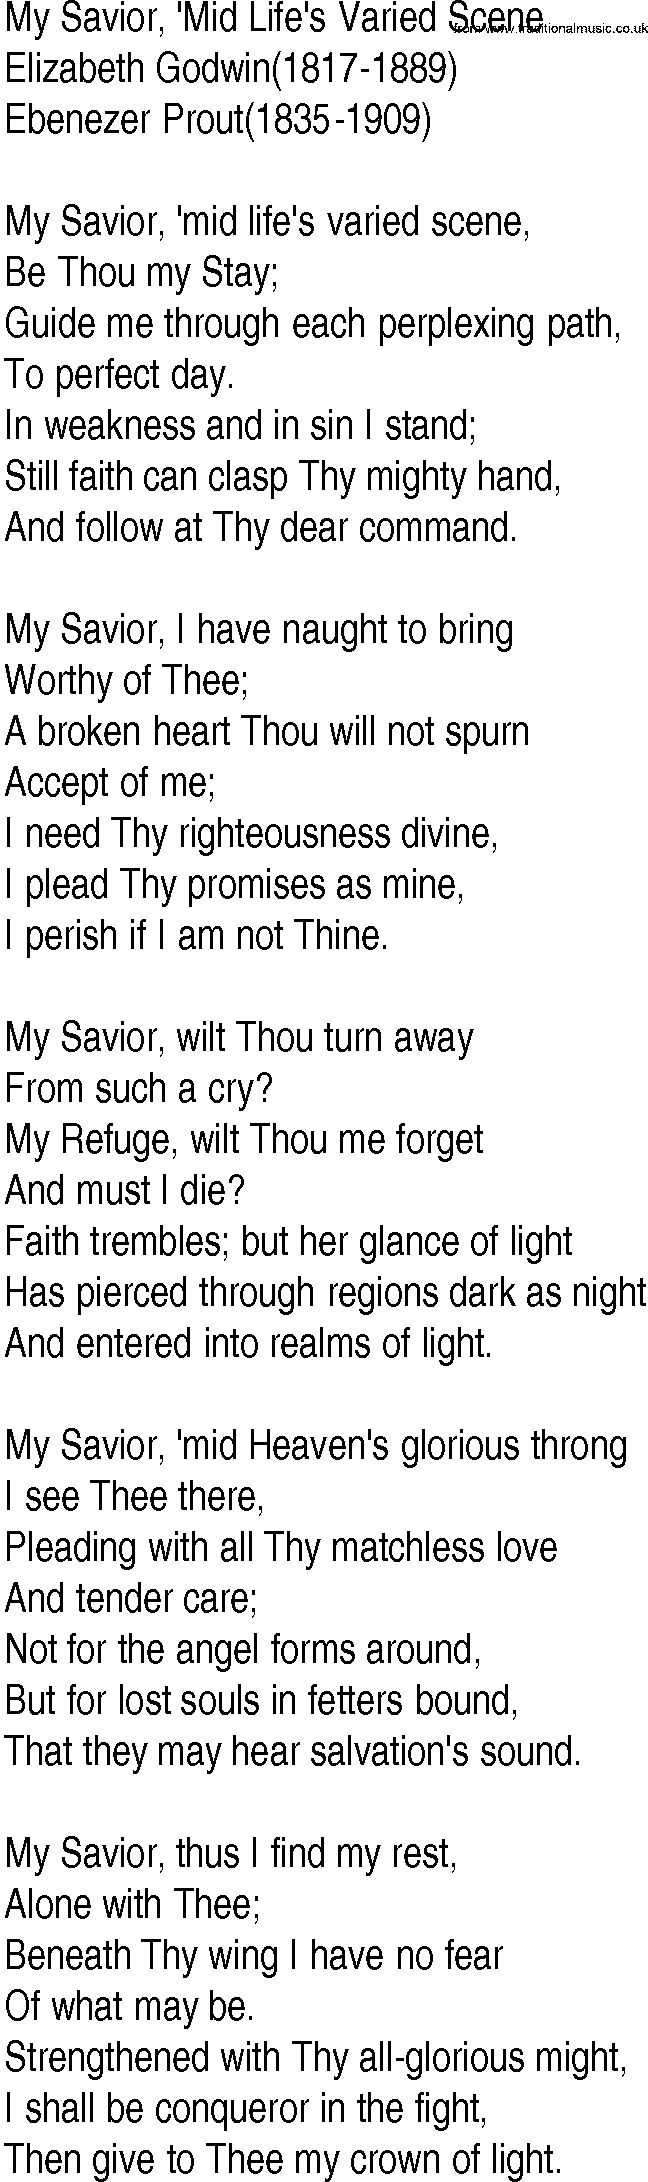 Hymn and Gospel Song: My Savior, 'Mid Life's Varied Scene by Elizabeth Godwin lyrics